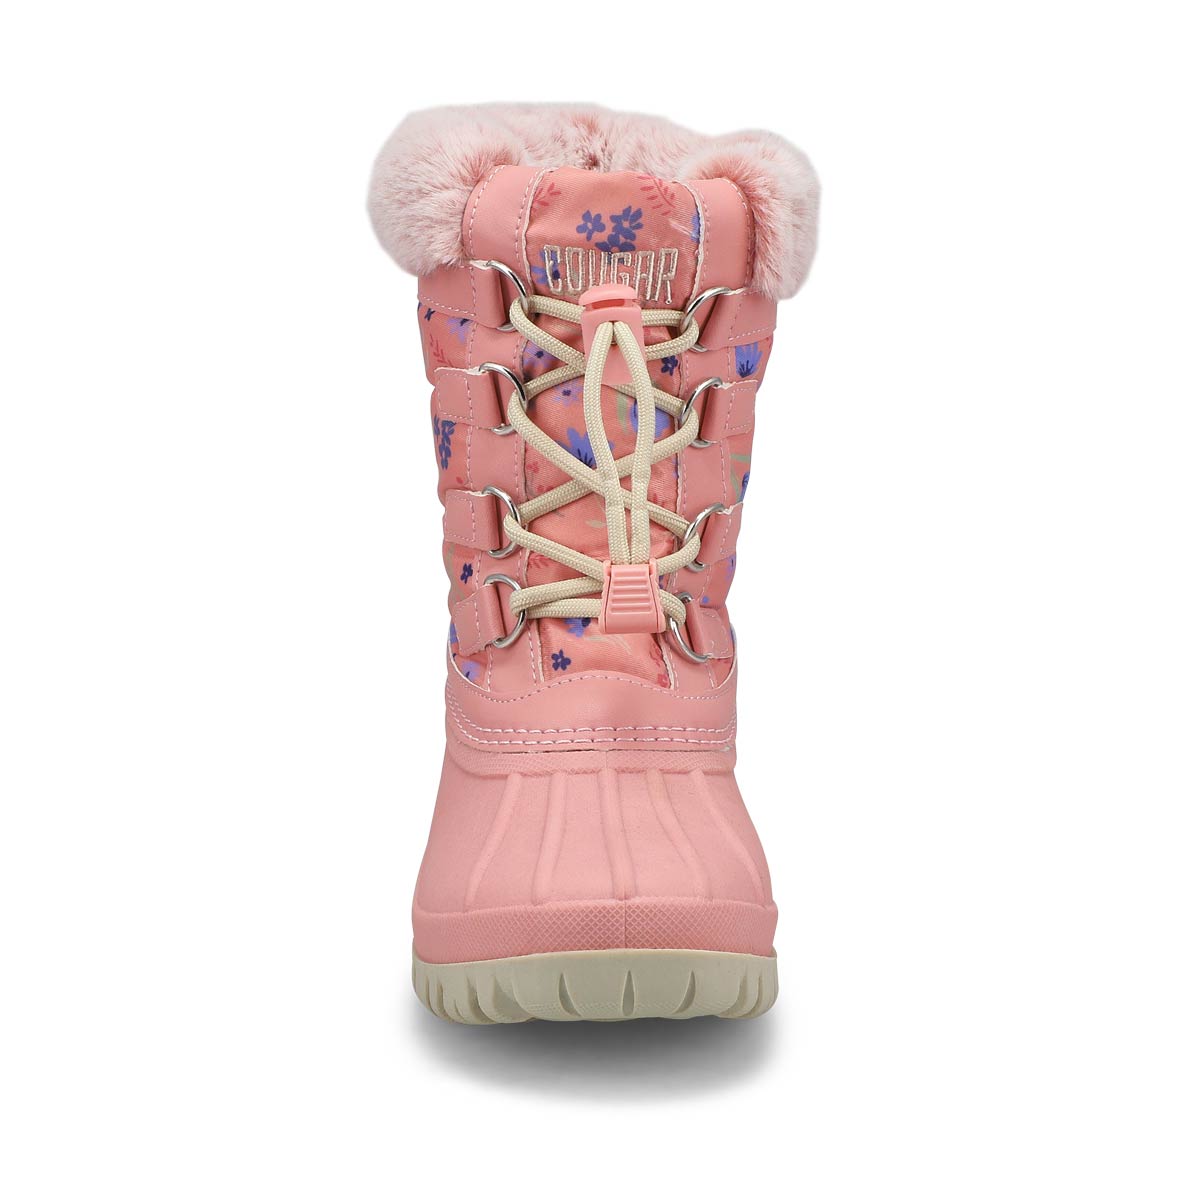 Girls' Charm Pull On Waterproof Winter Boot - Pink